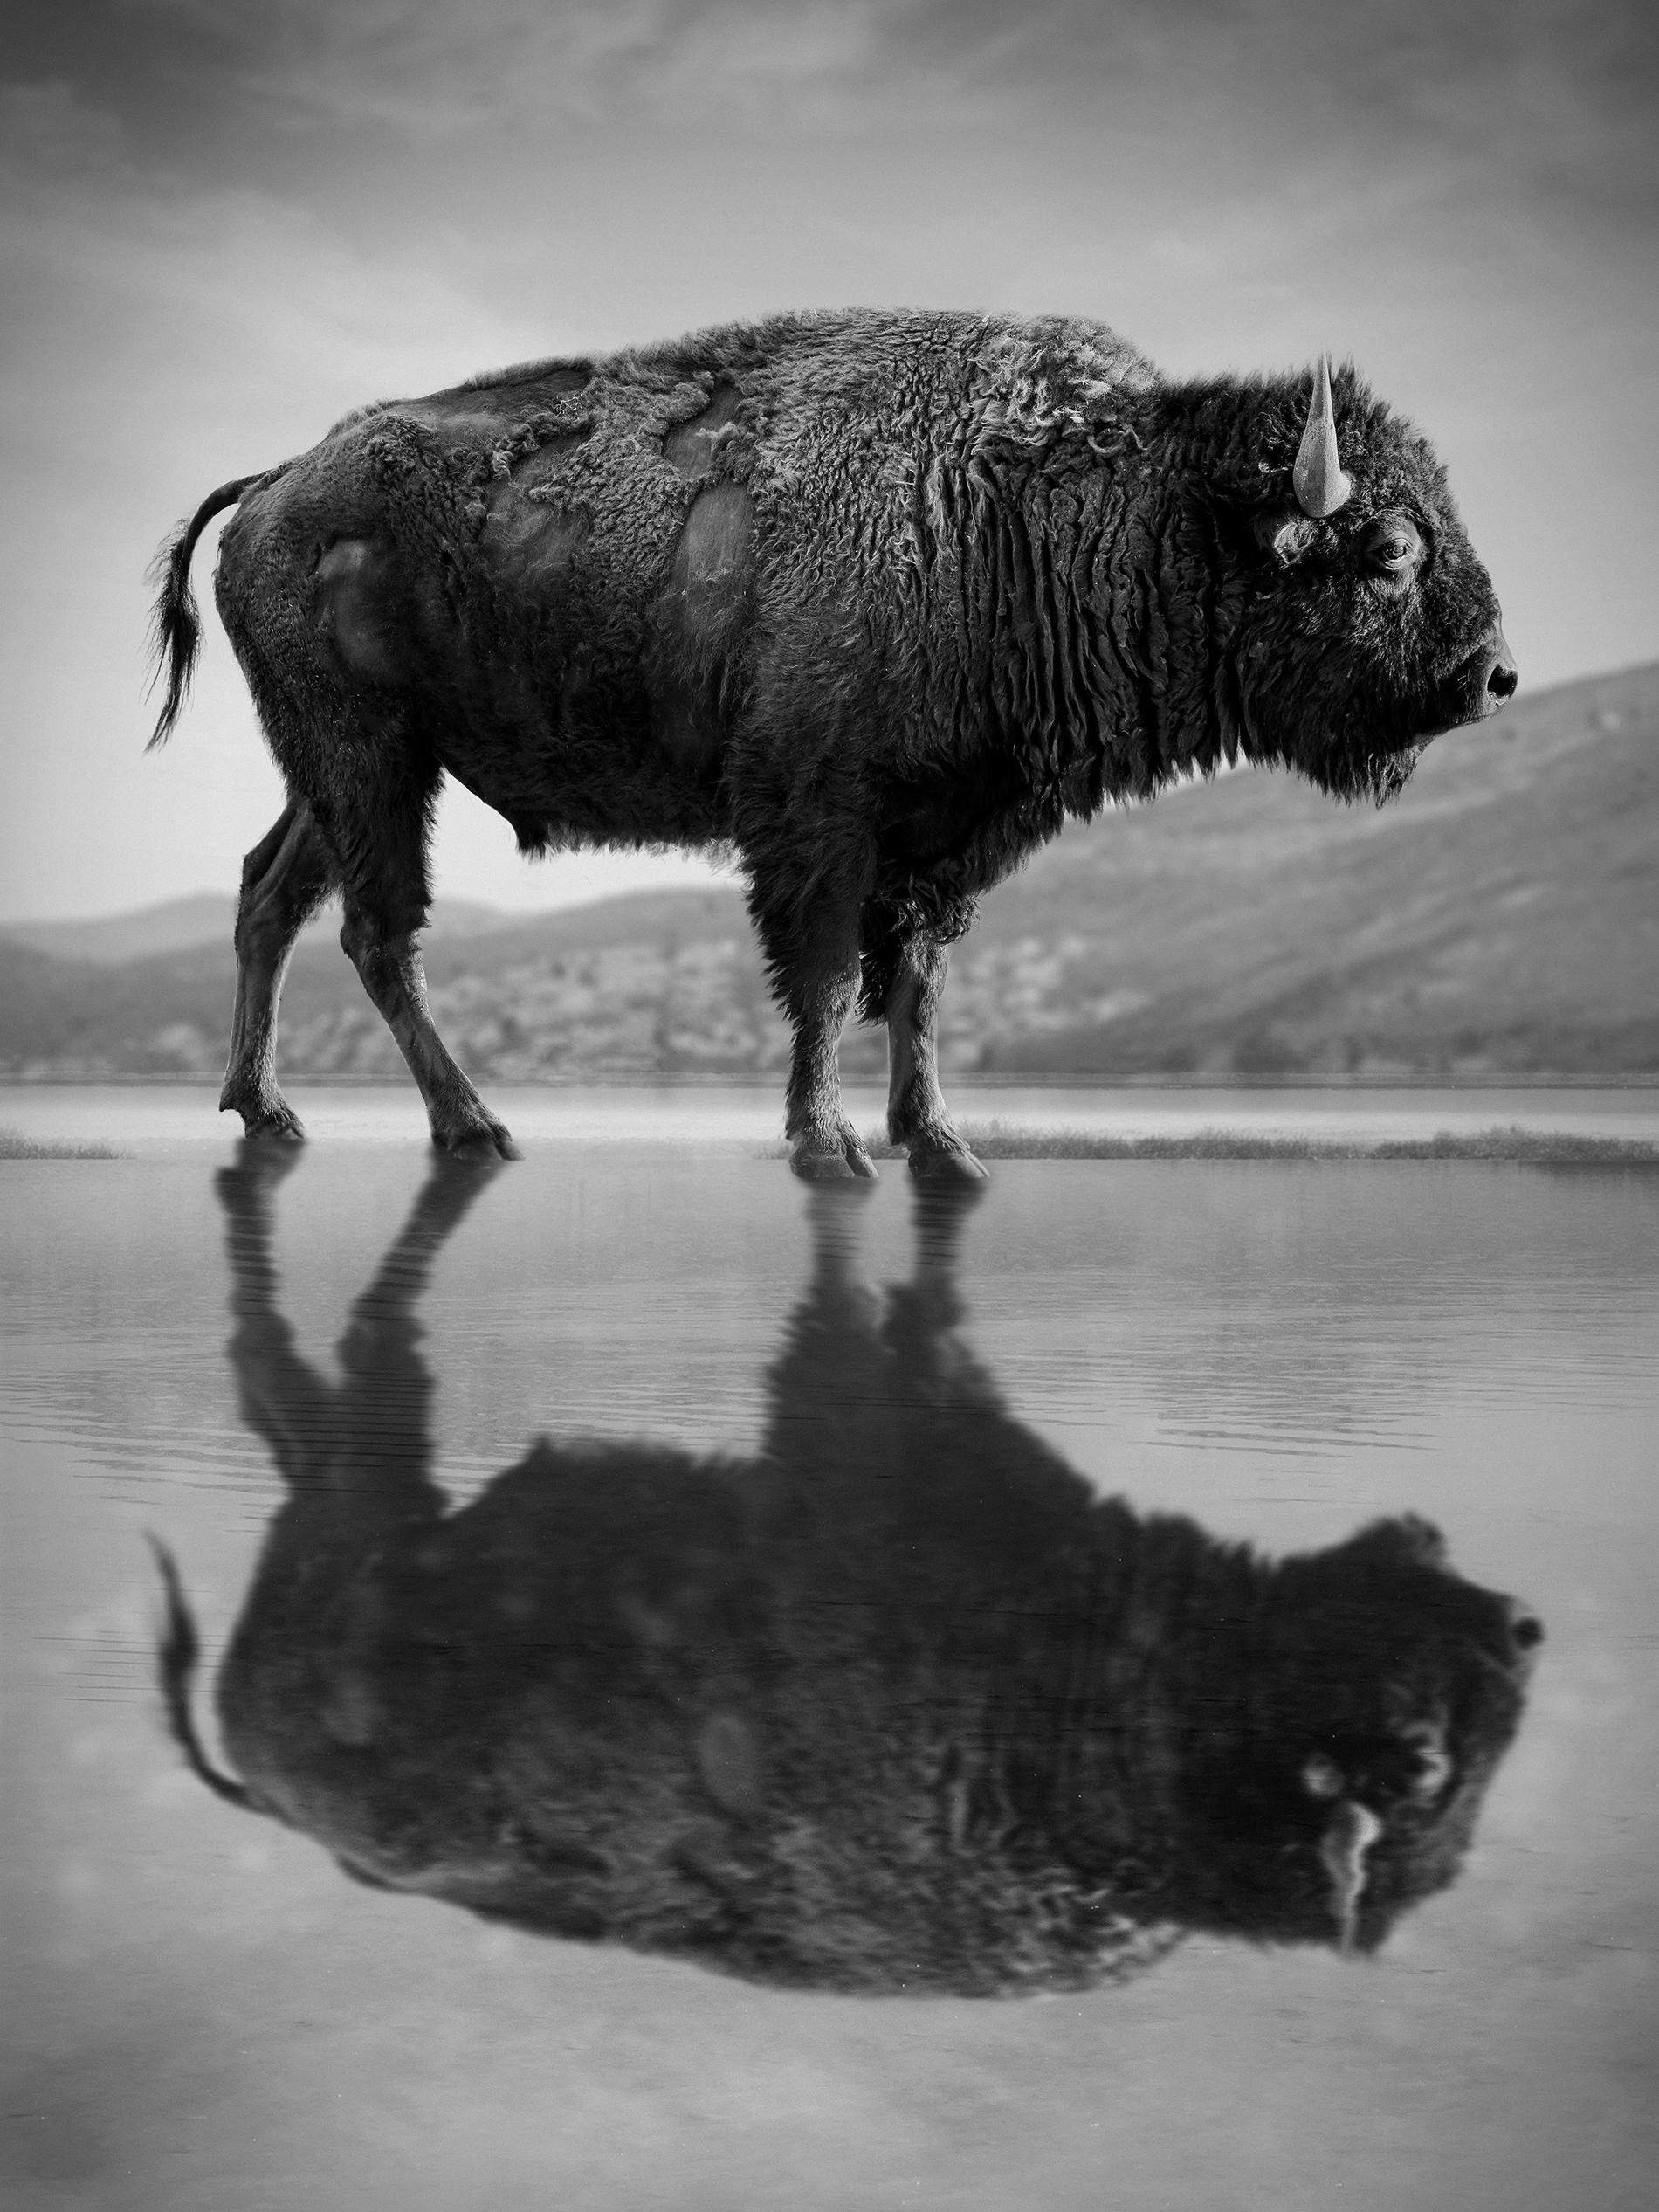 Shane Russeck Animal Print - "Old World" 36x48  Black & White Photography Bison Buffalo Fine Art Photograph